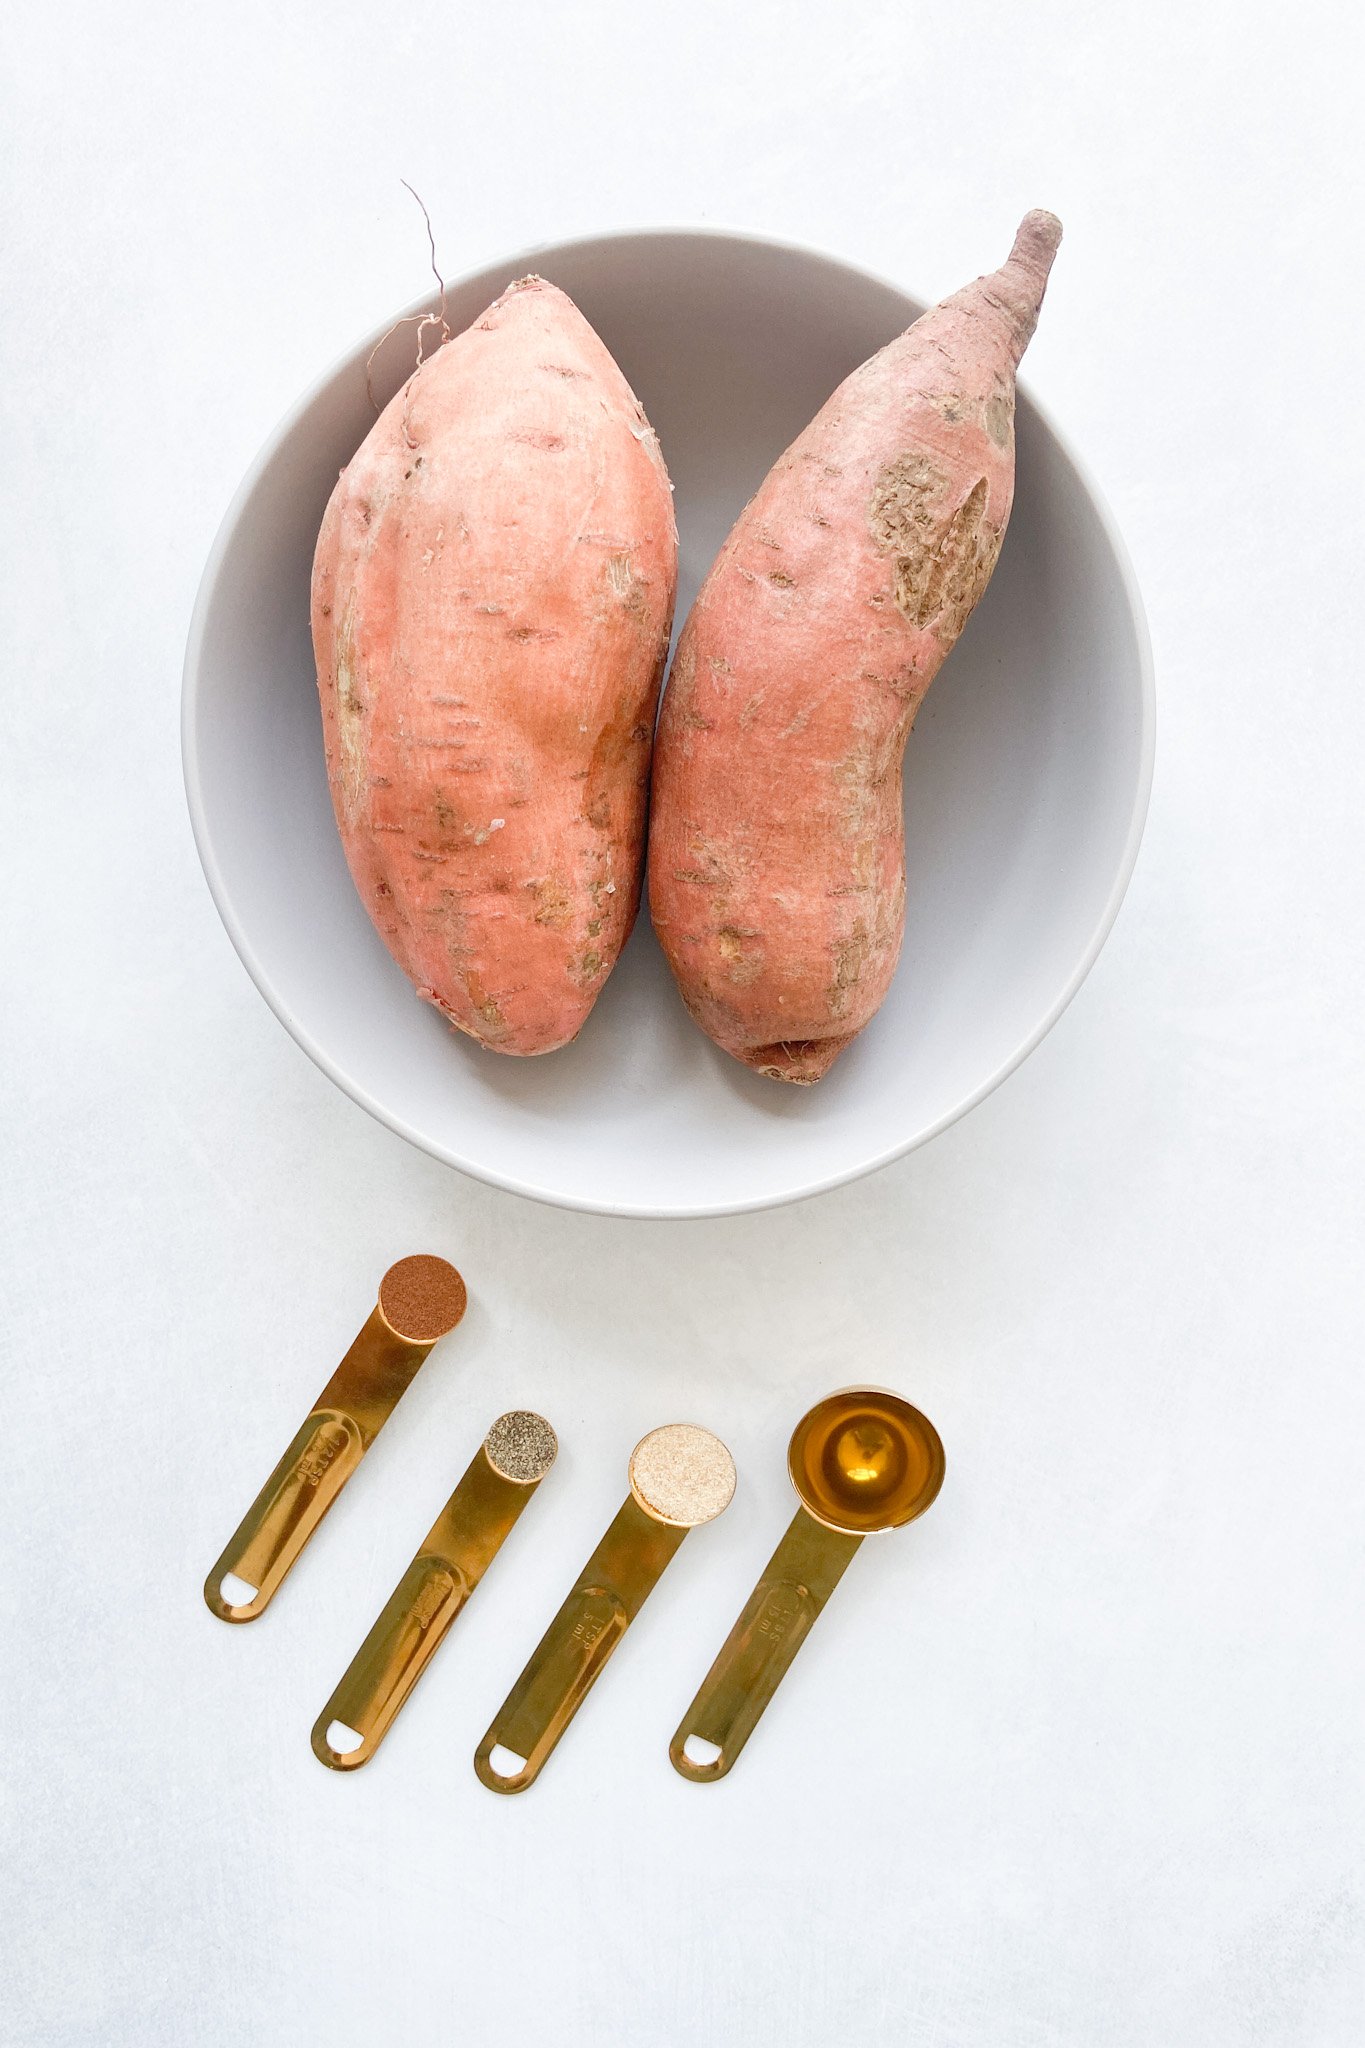 Ingredients to make air fryer sweet potatoes. See recipe card for detailed ingredient quantities.